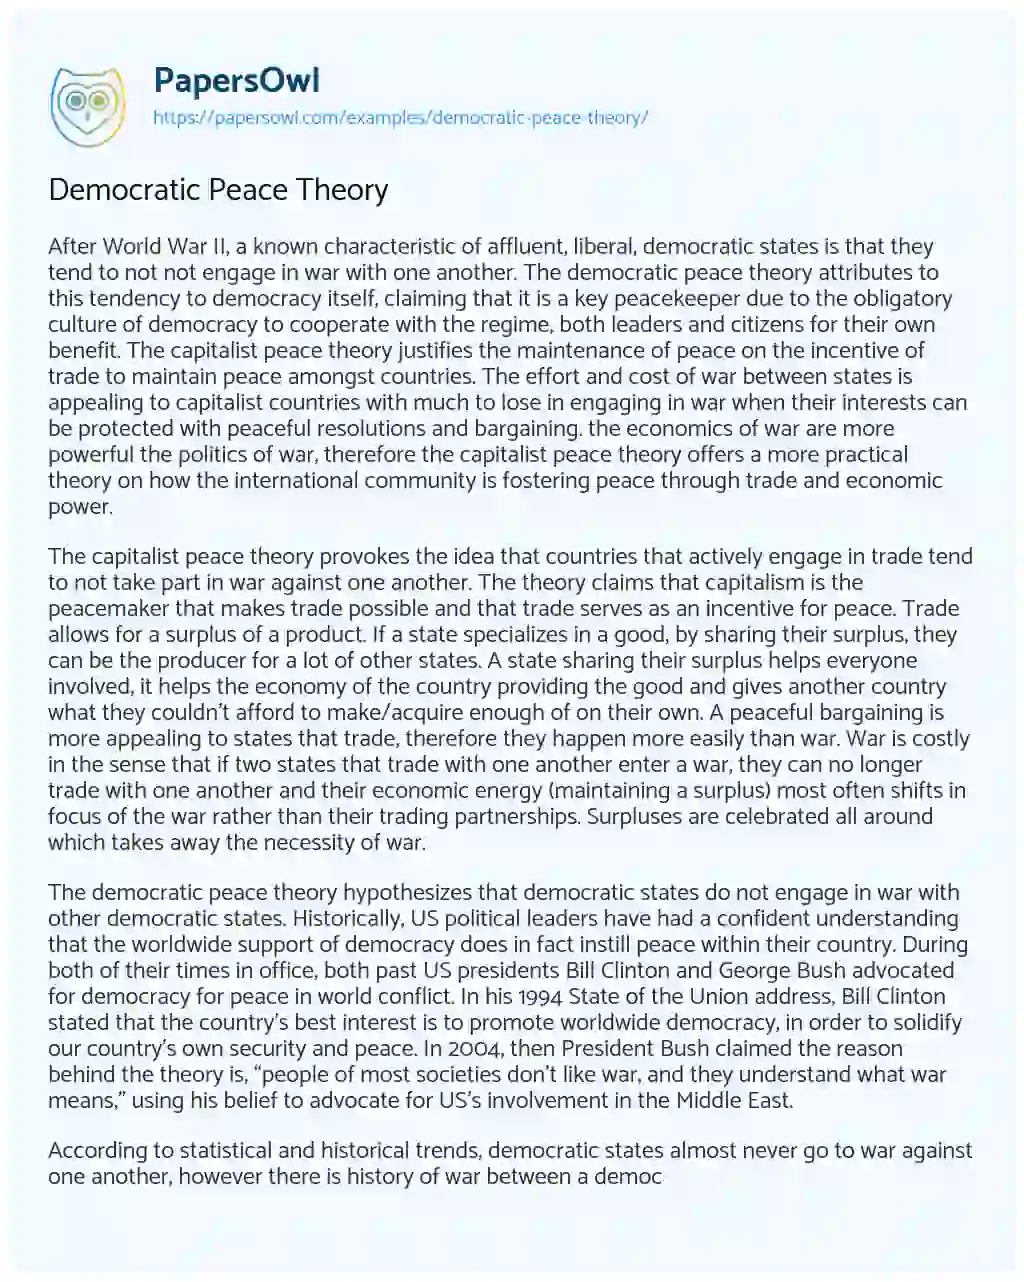 Democratic Peace Theory essay